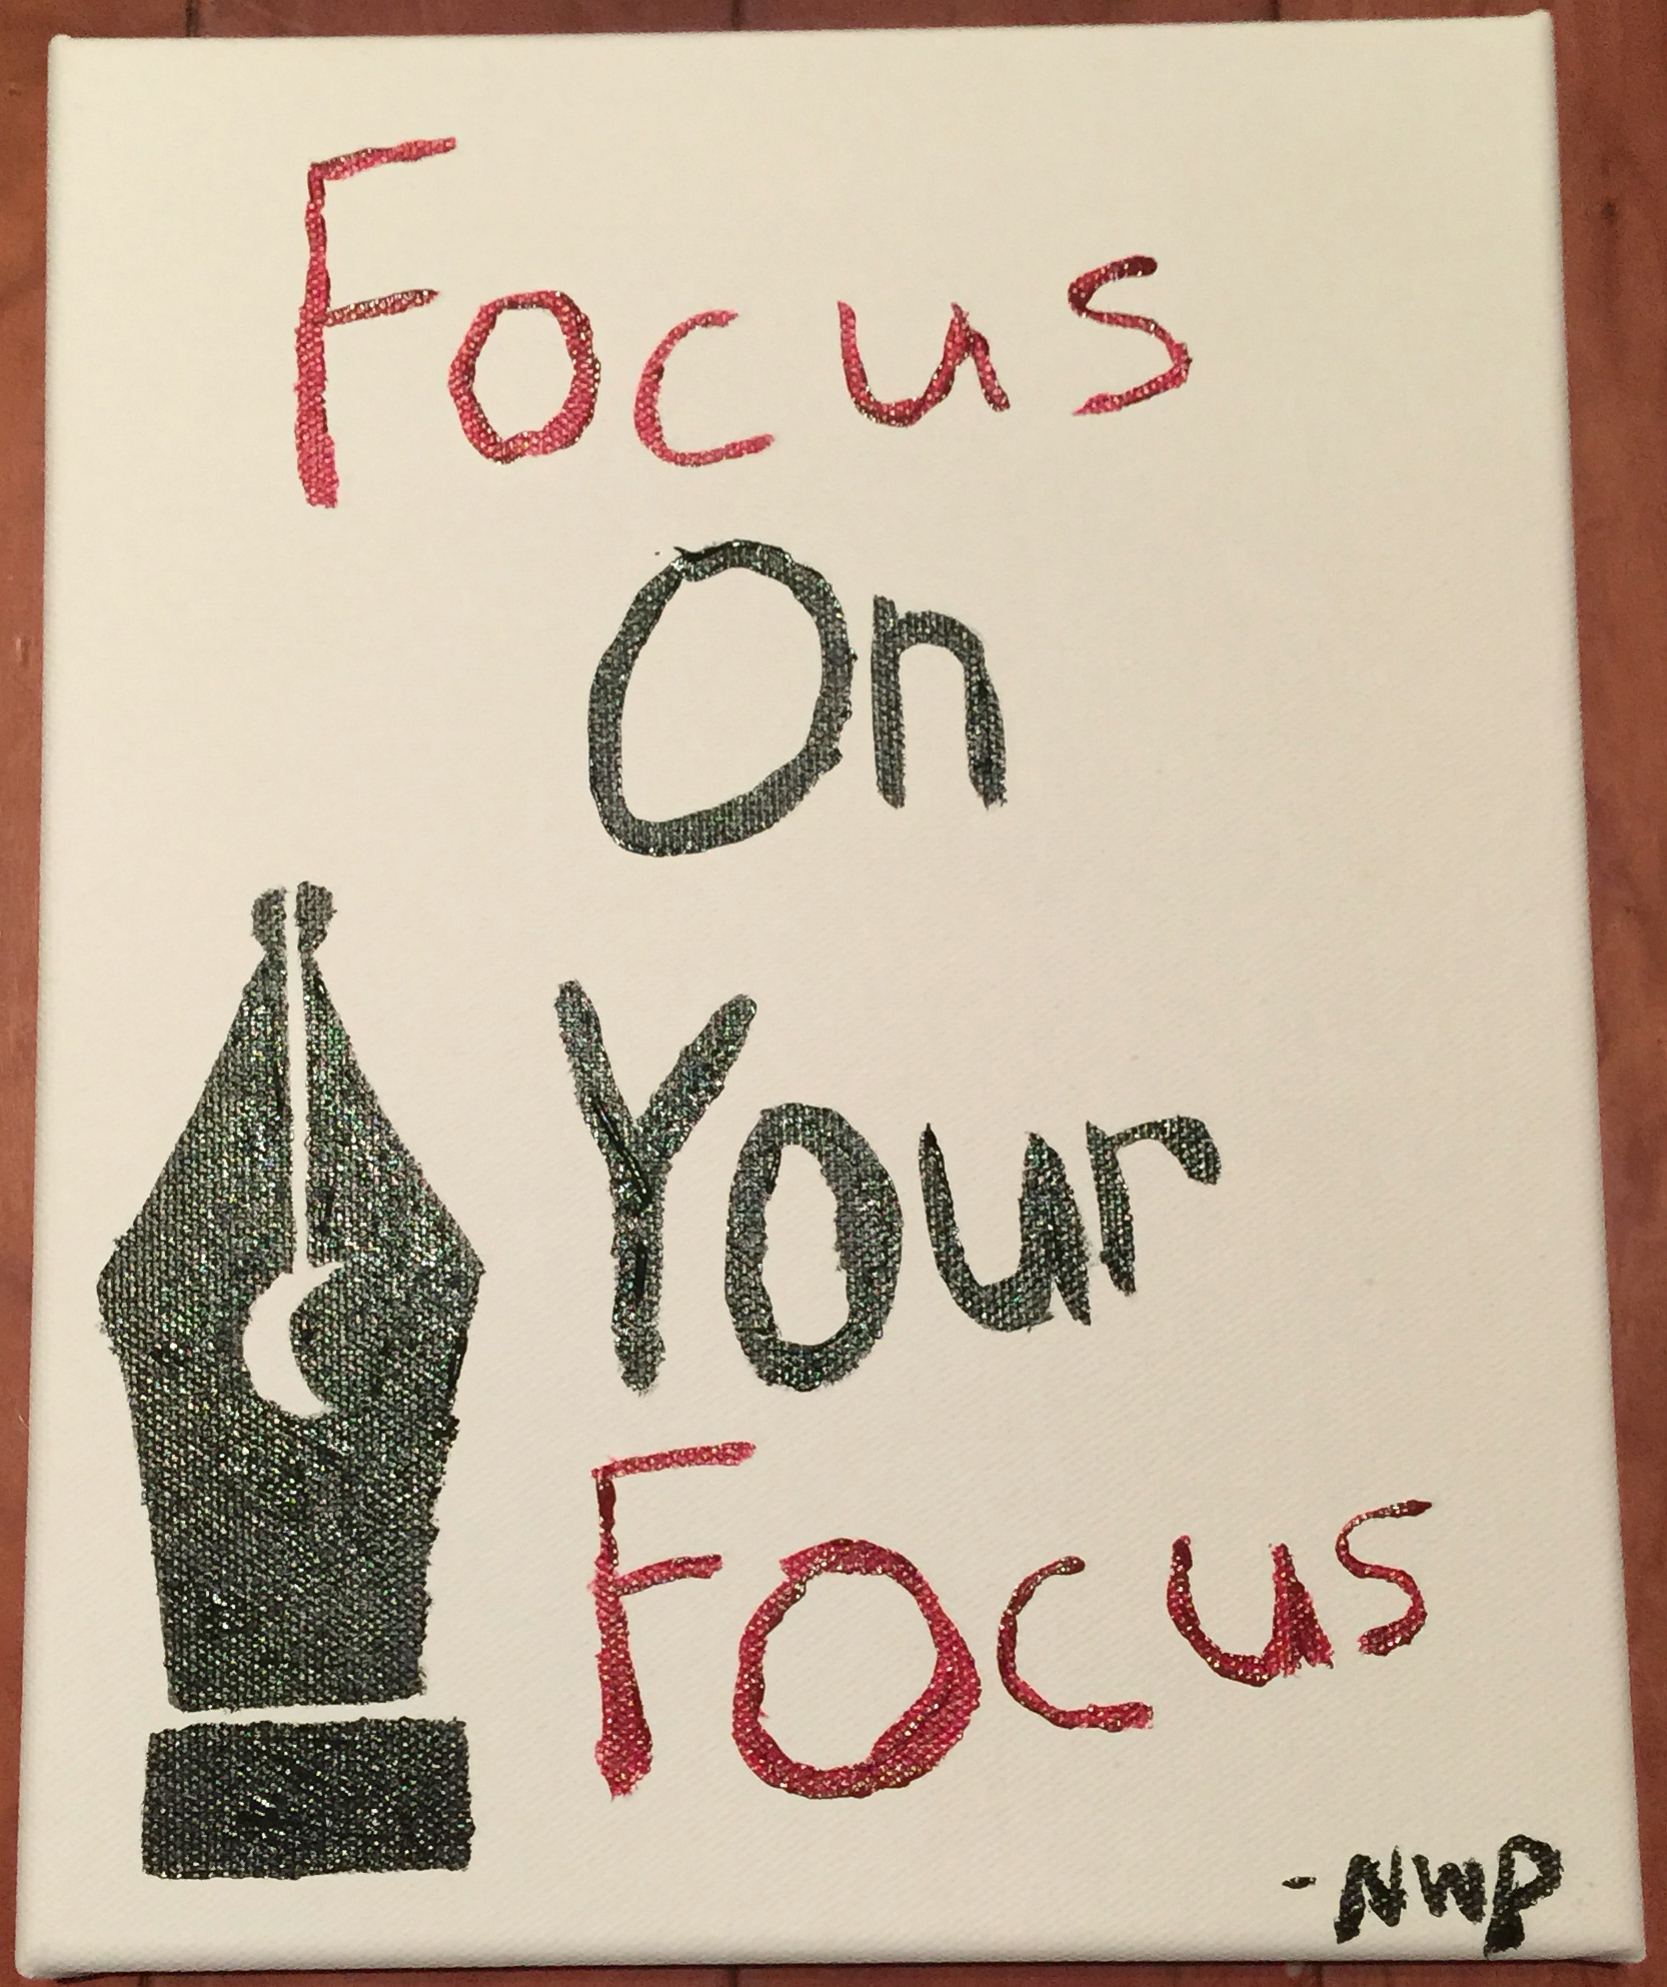 A Reminder Of Focus